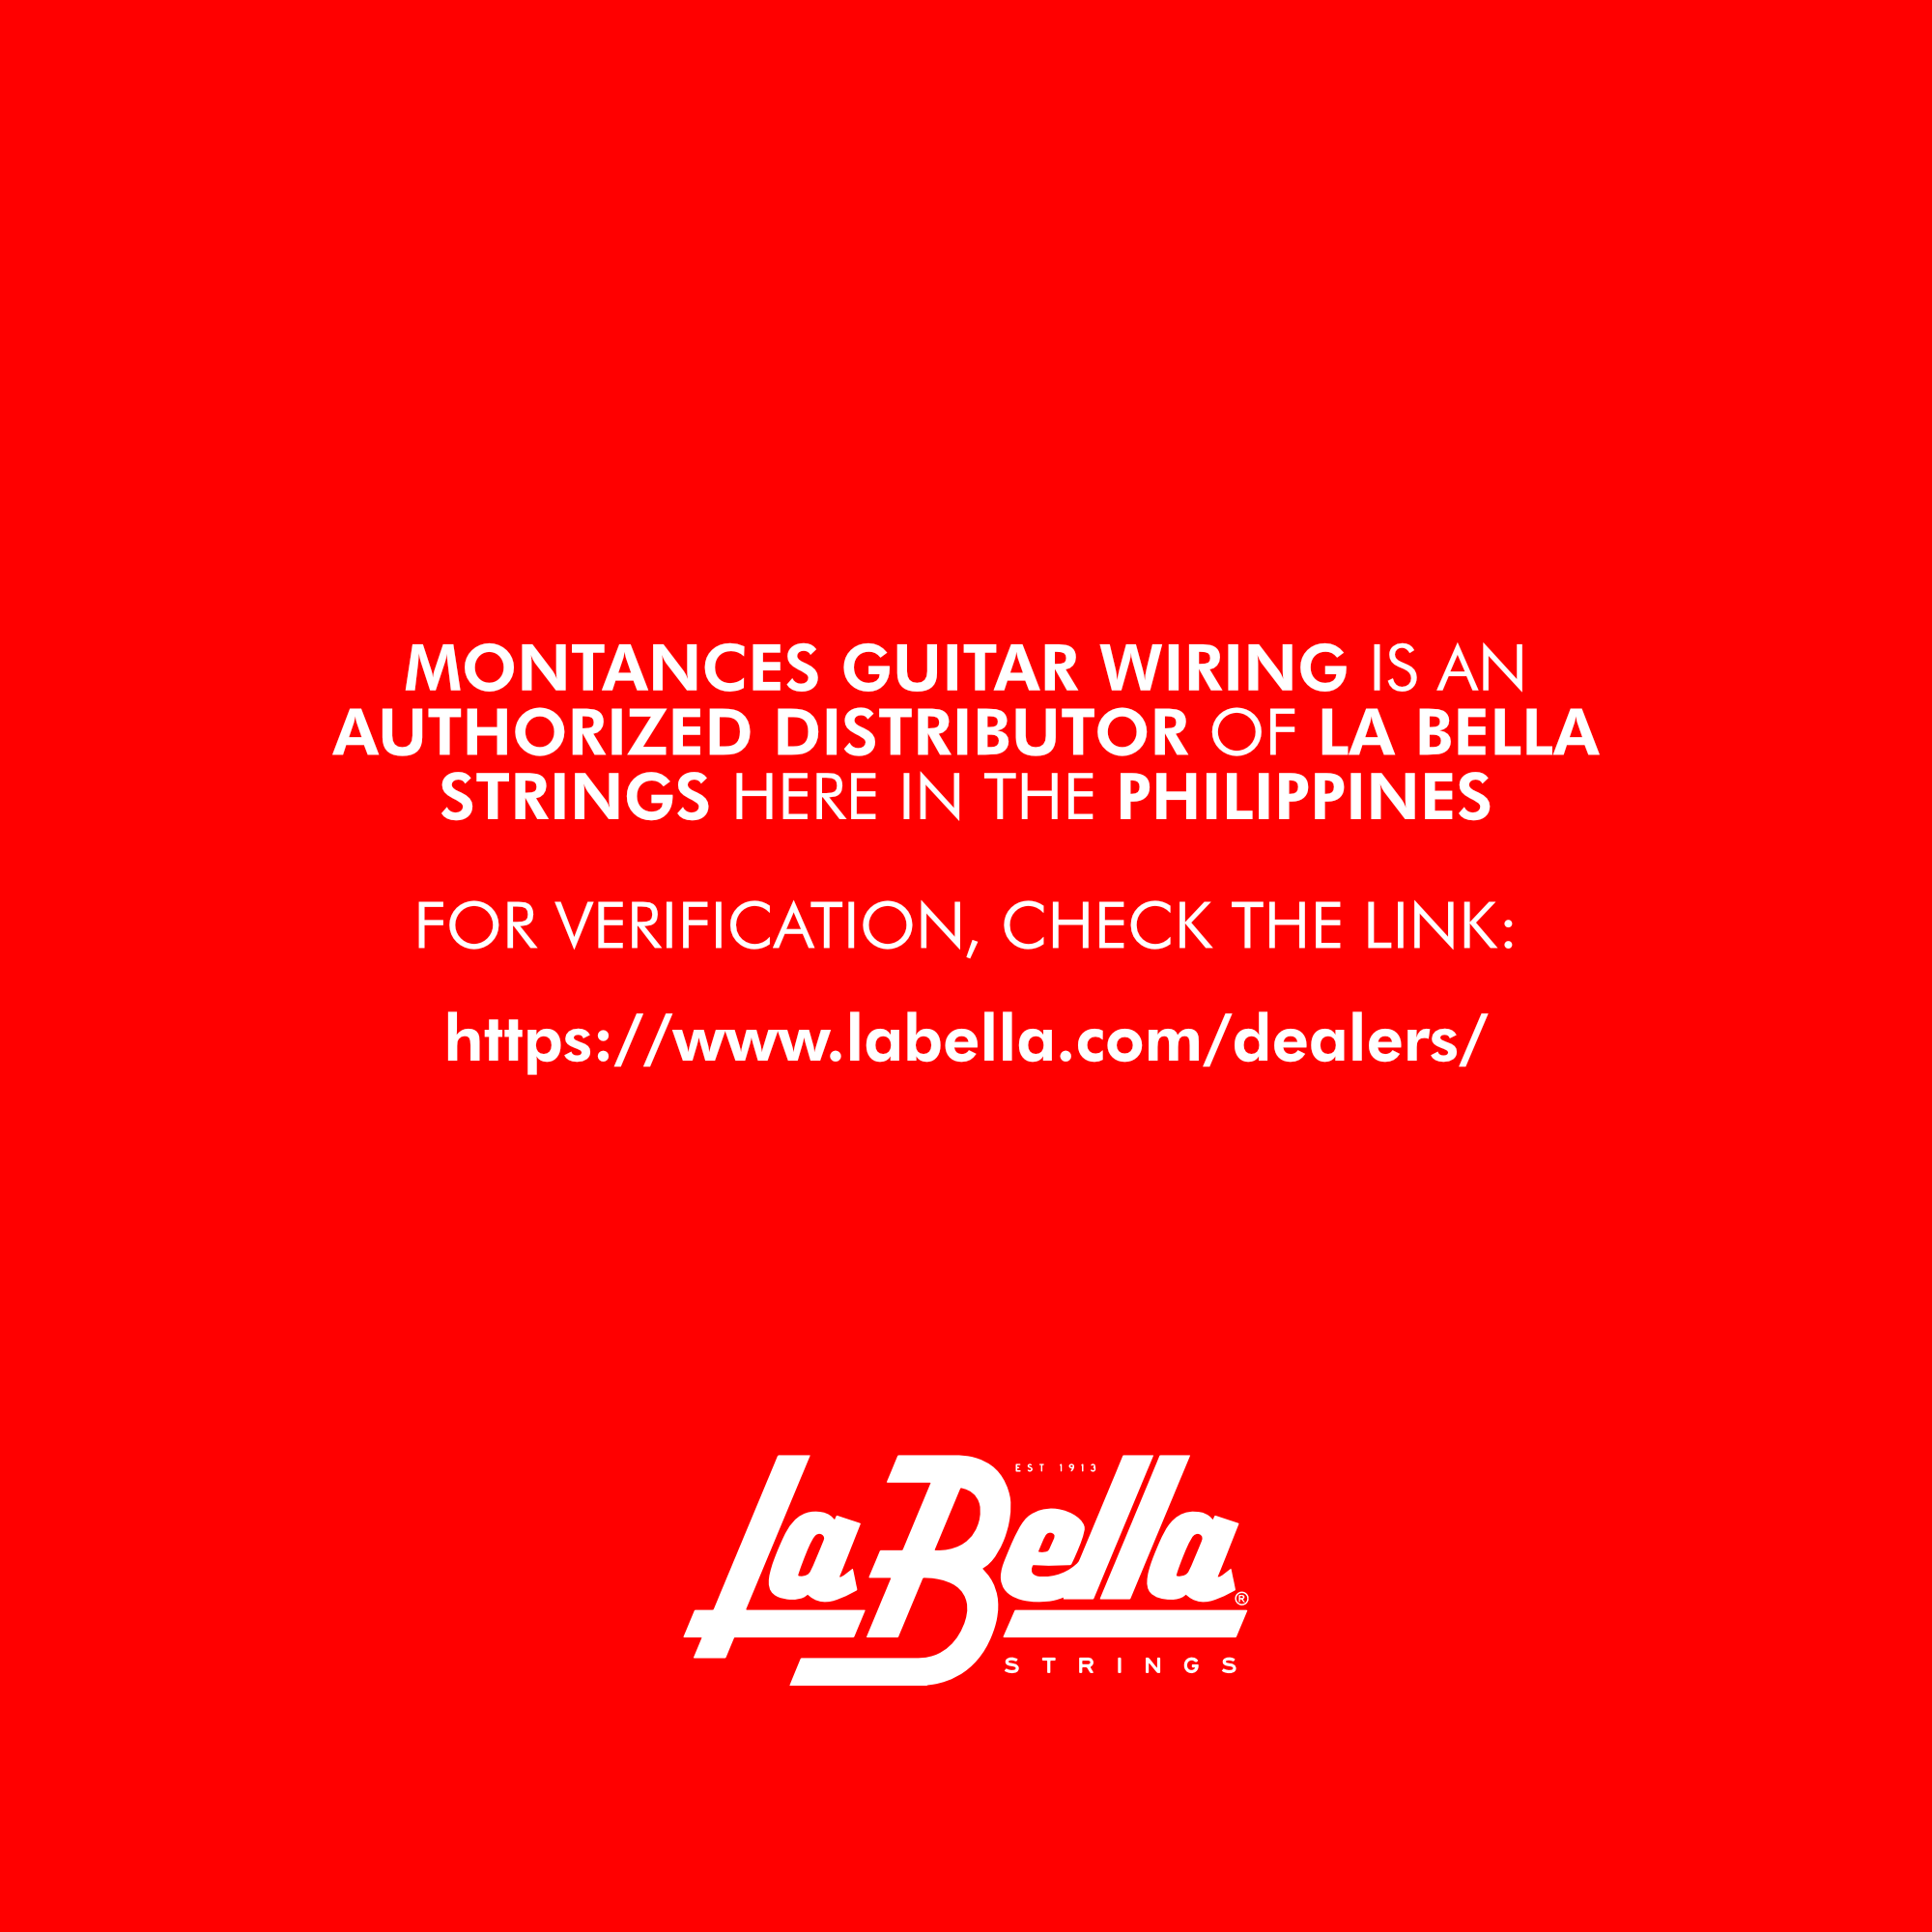 La Bella® RX-N6A Rx Nickel, 30-40-60-80-100-118 - Bass Guitar Strings